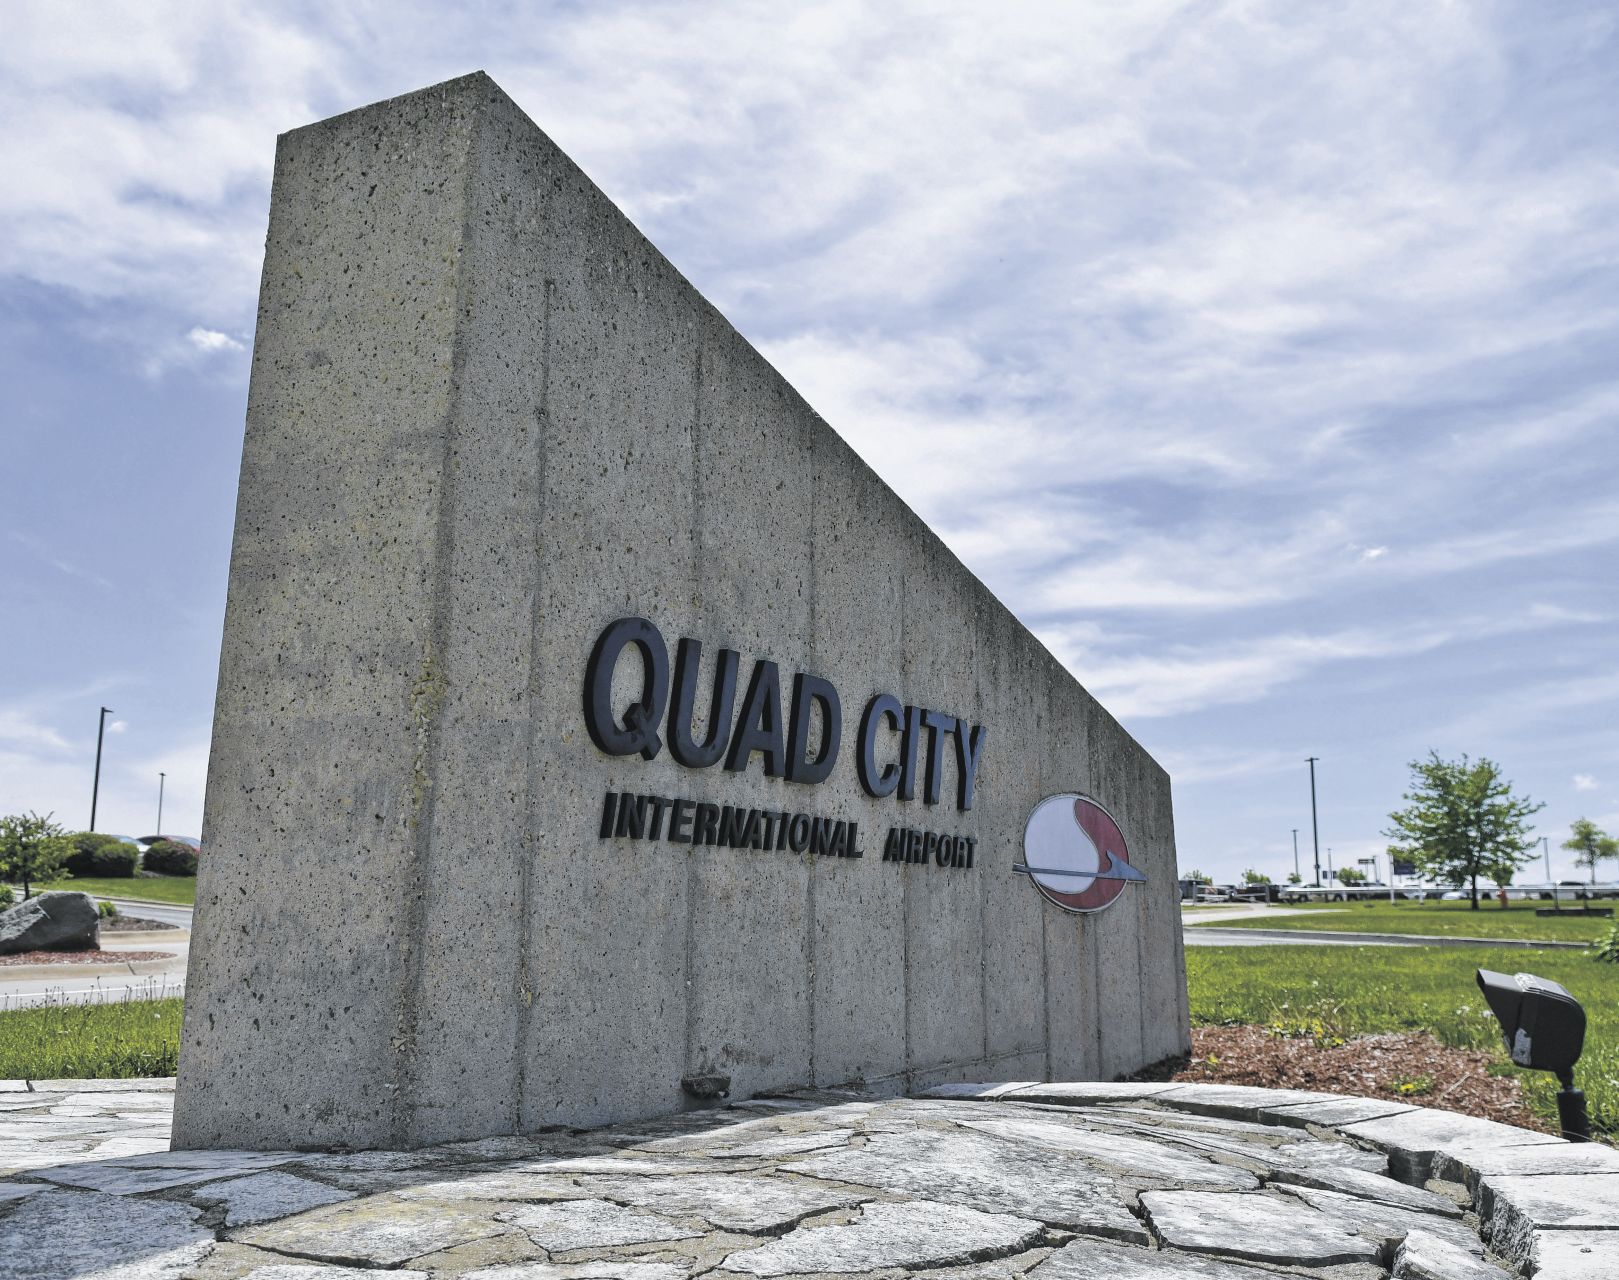 quad city international airport fire department facebook